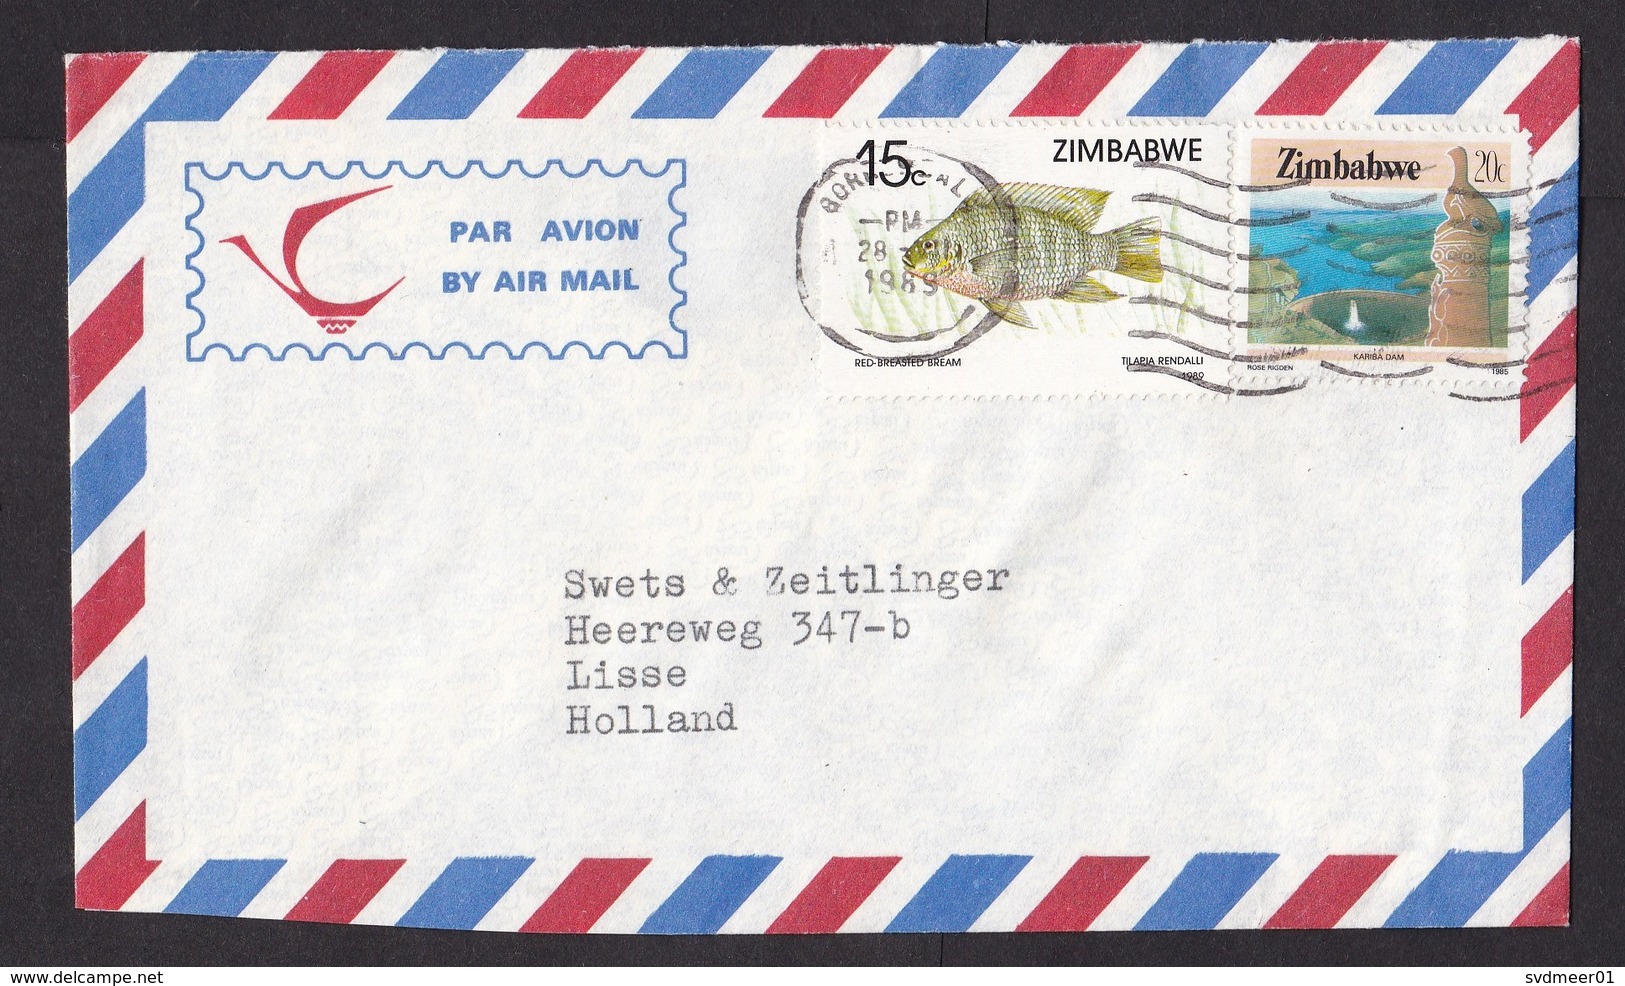 Zimbabwe: Airmail Cover To Netherlands, 1989, 2 Stamps, Tilapia Fish, Hydro Energy Dam (traces Of Use) - Zimbabwe (1980-...)